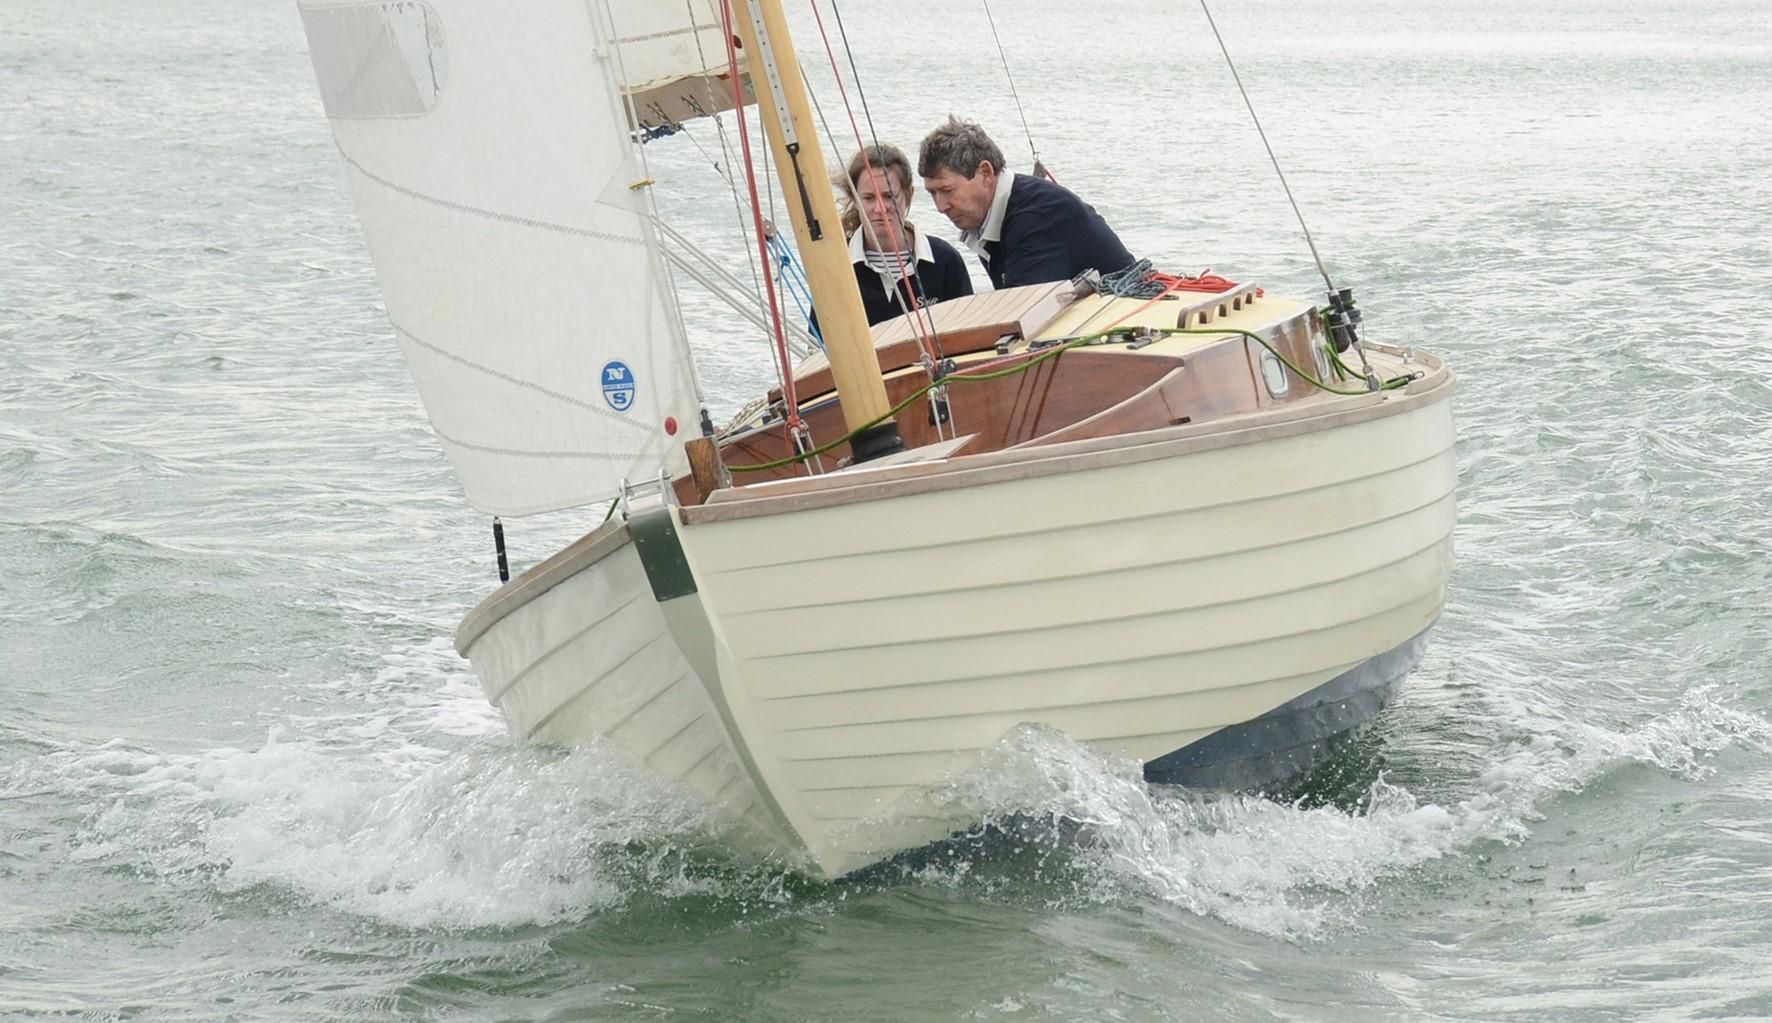 ebay sailboats for sale uk